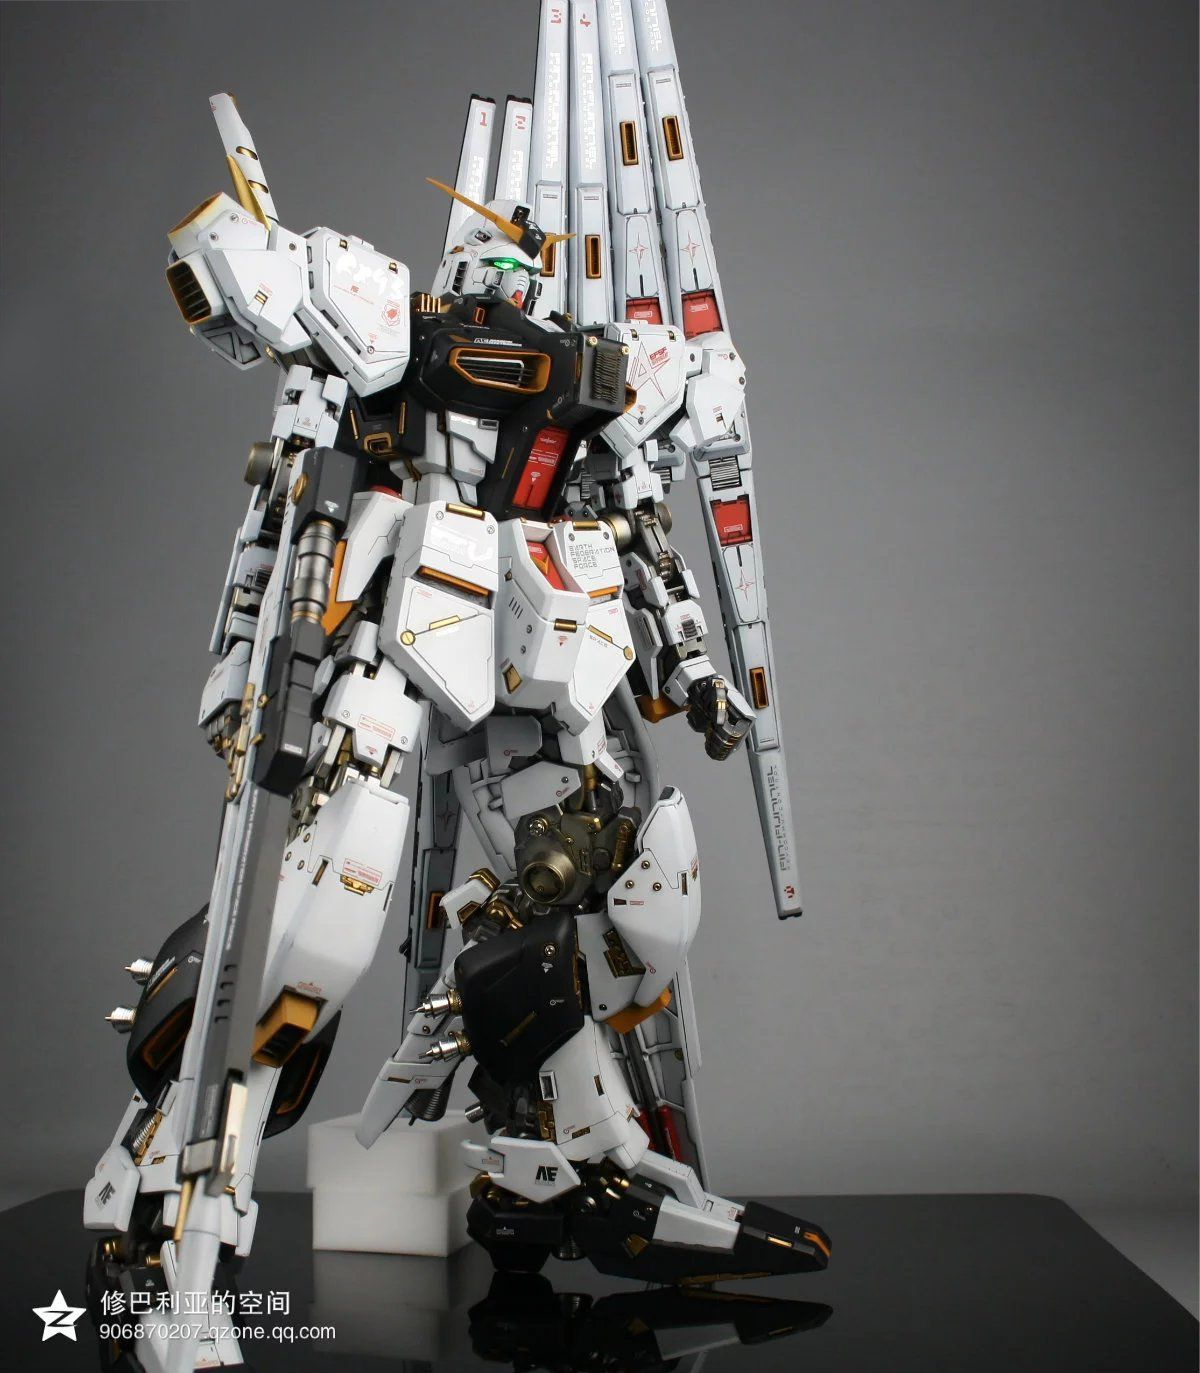 1/48 G-System Nu Gundam Part 1: Unboxing & Modding